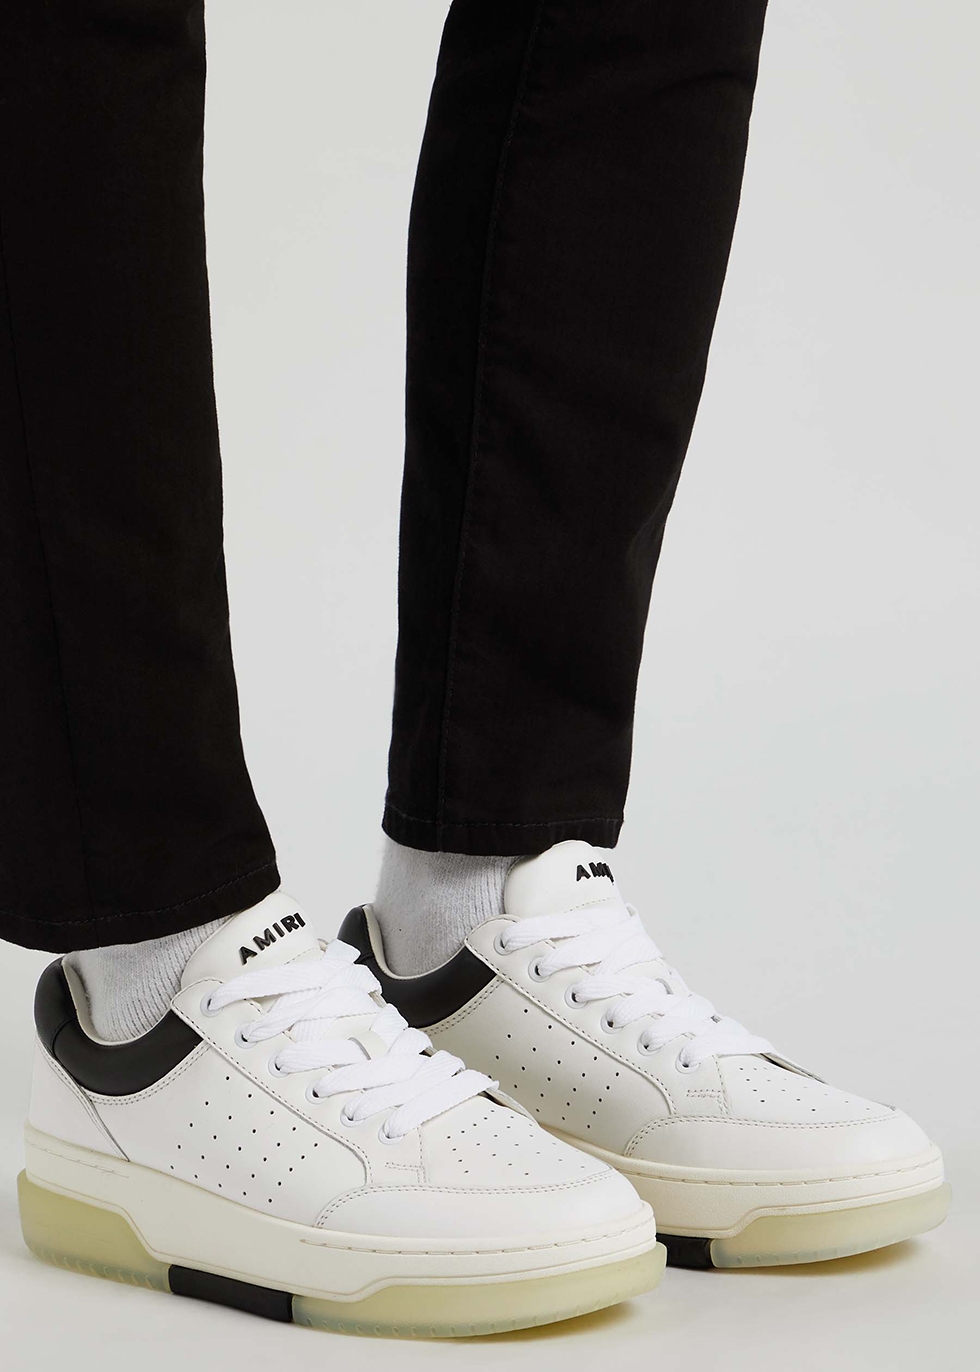 Amiri Stadium white leather sneakers - Harvey Nichols